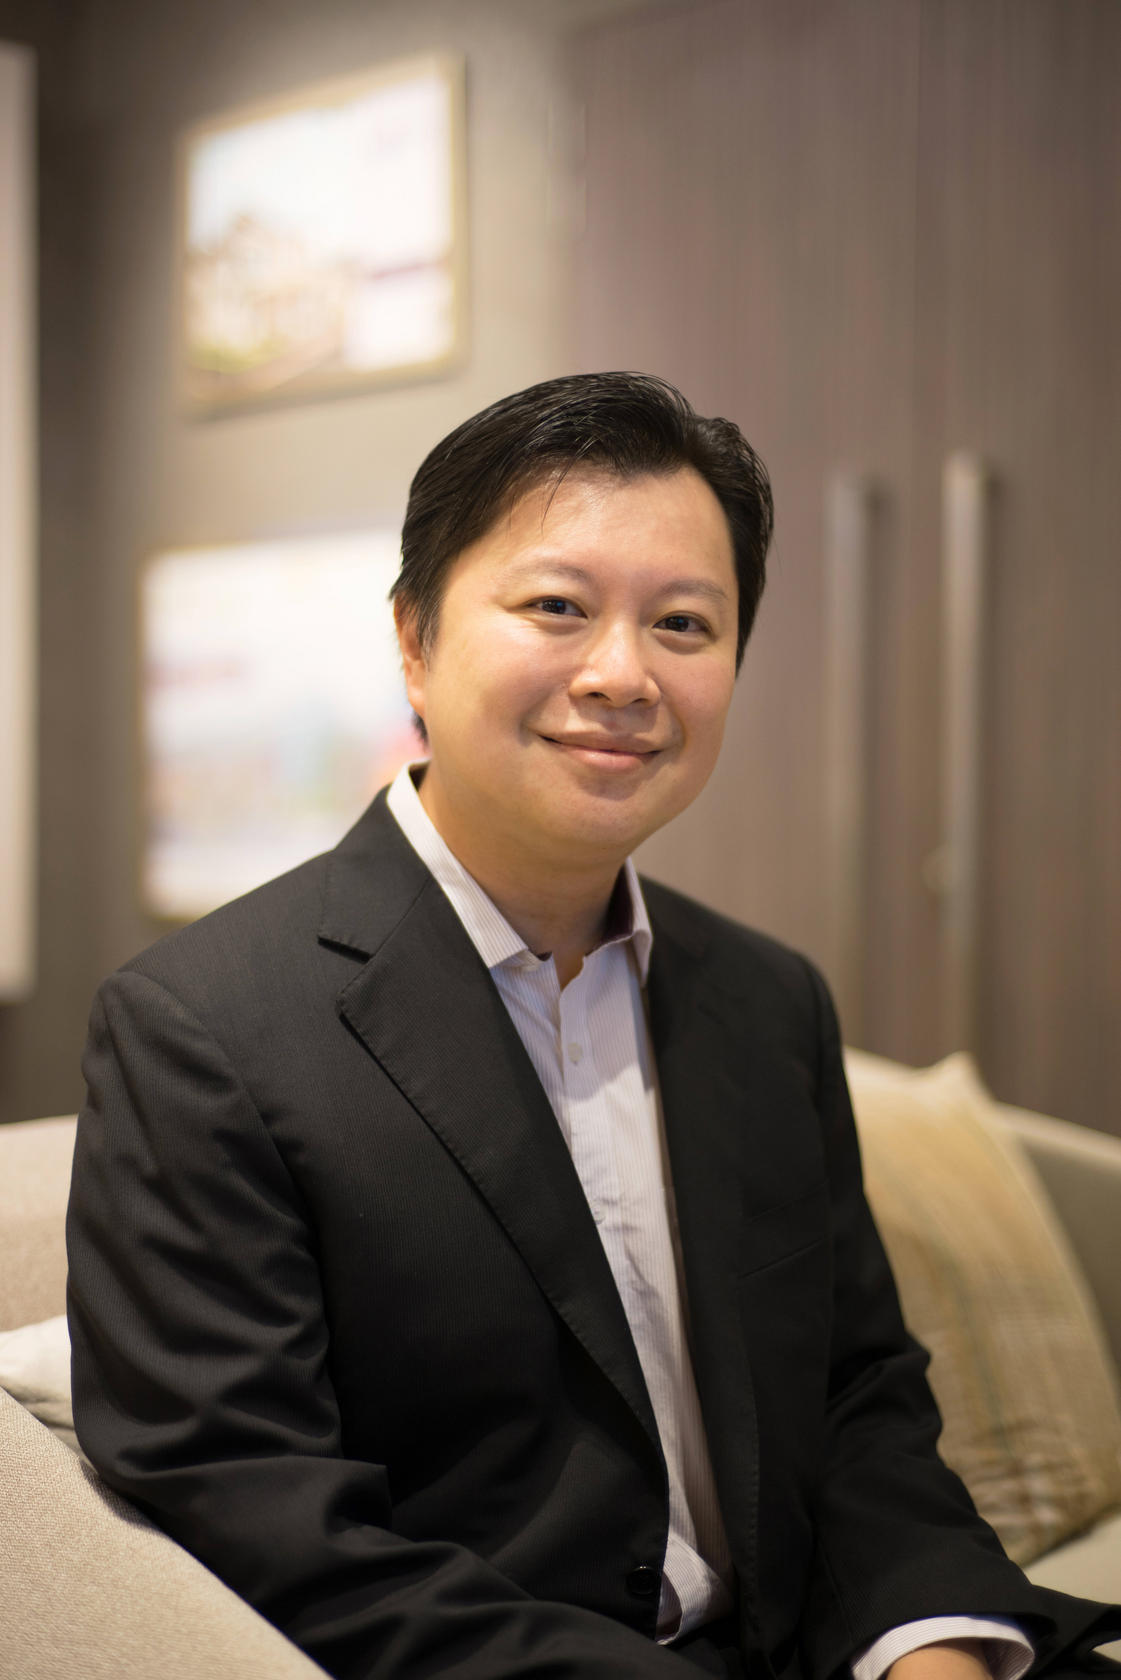 Dennis Ng, executive director